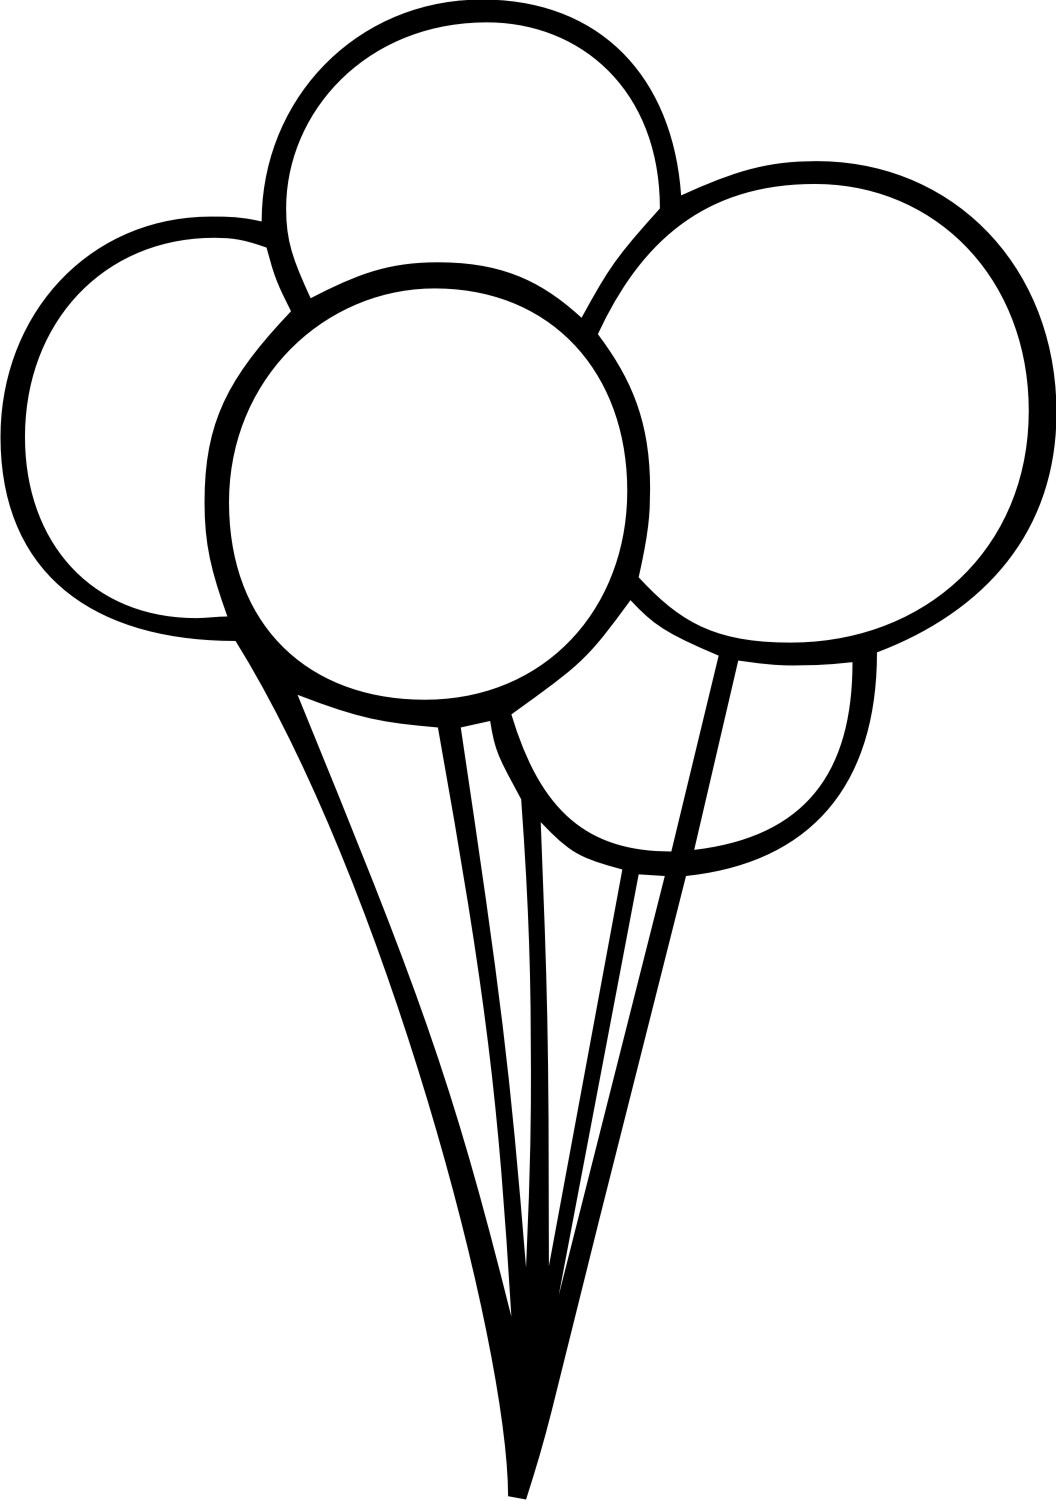 Balloon Silhouette 5 Clipart